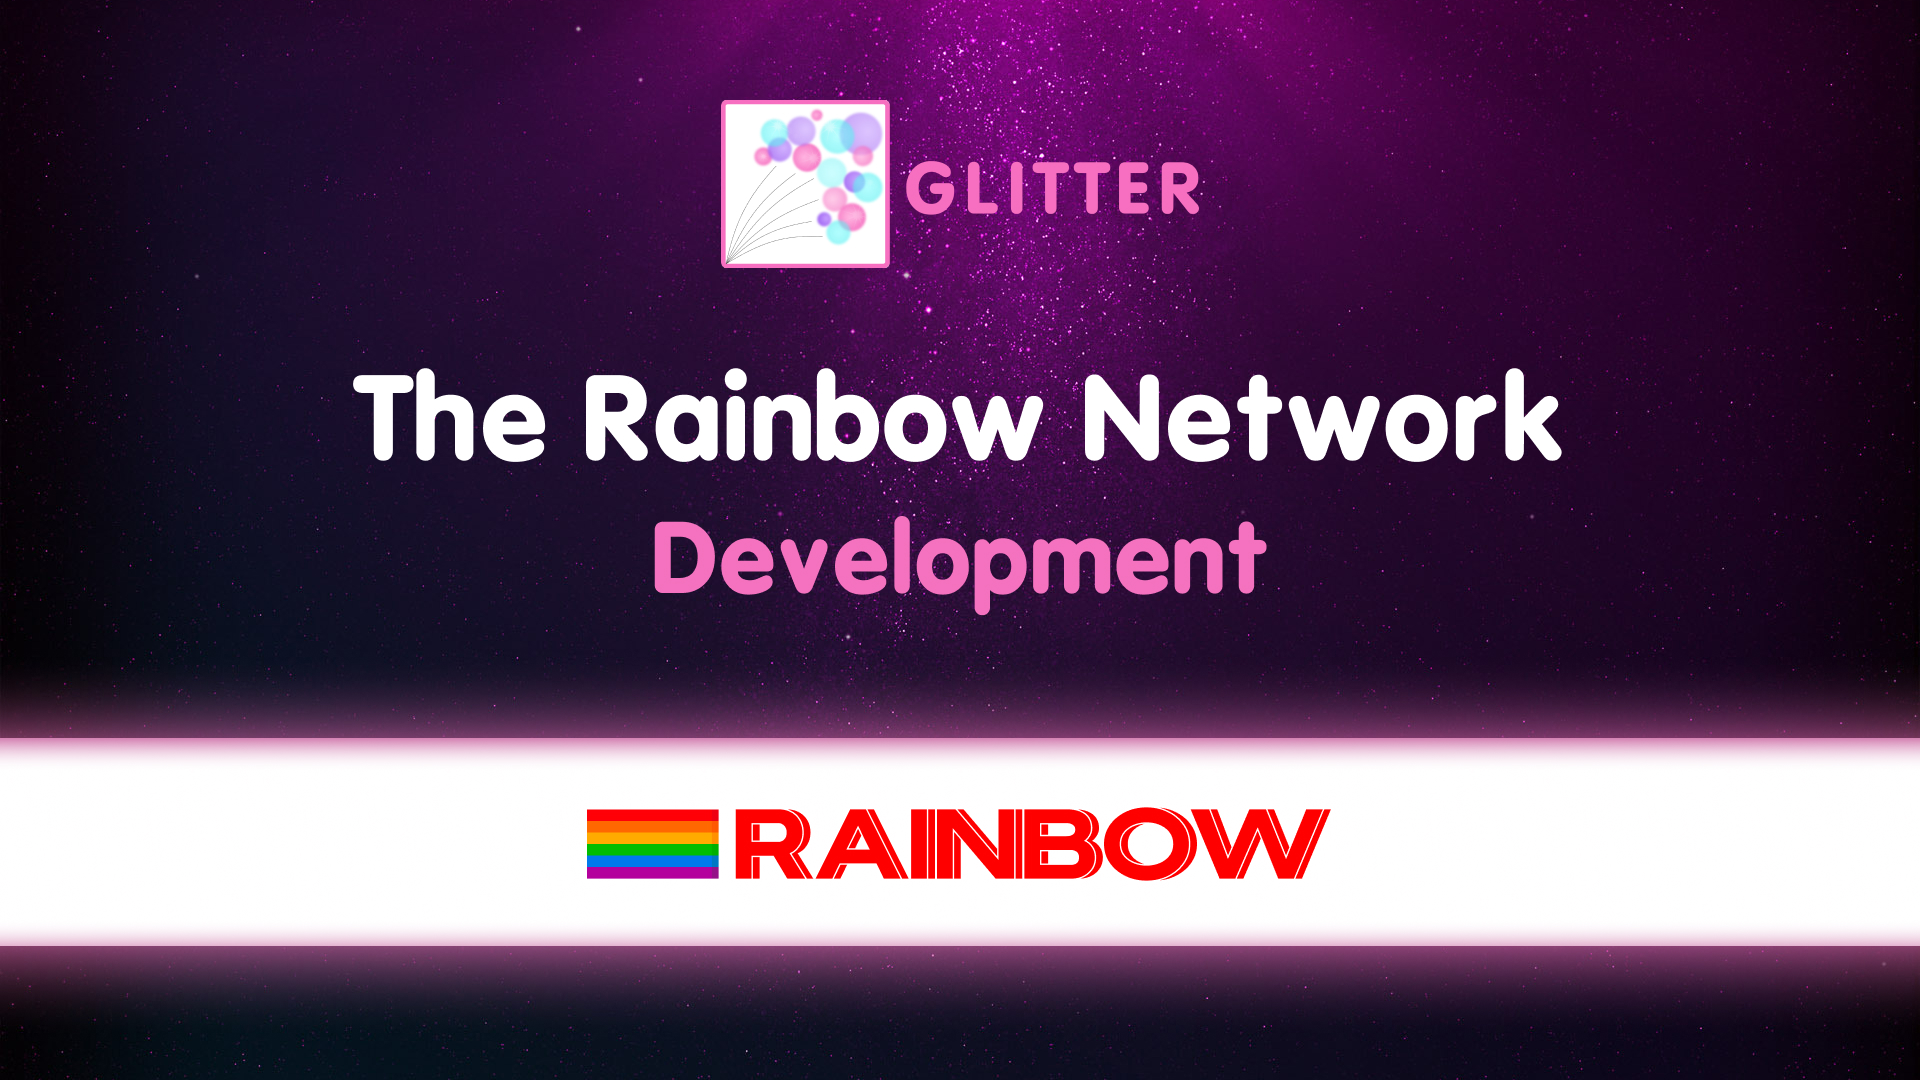 The Rainbow Network development